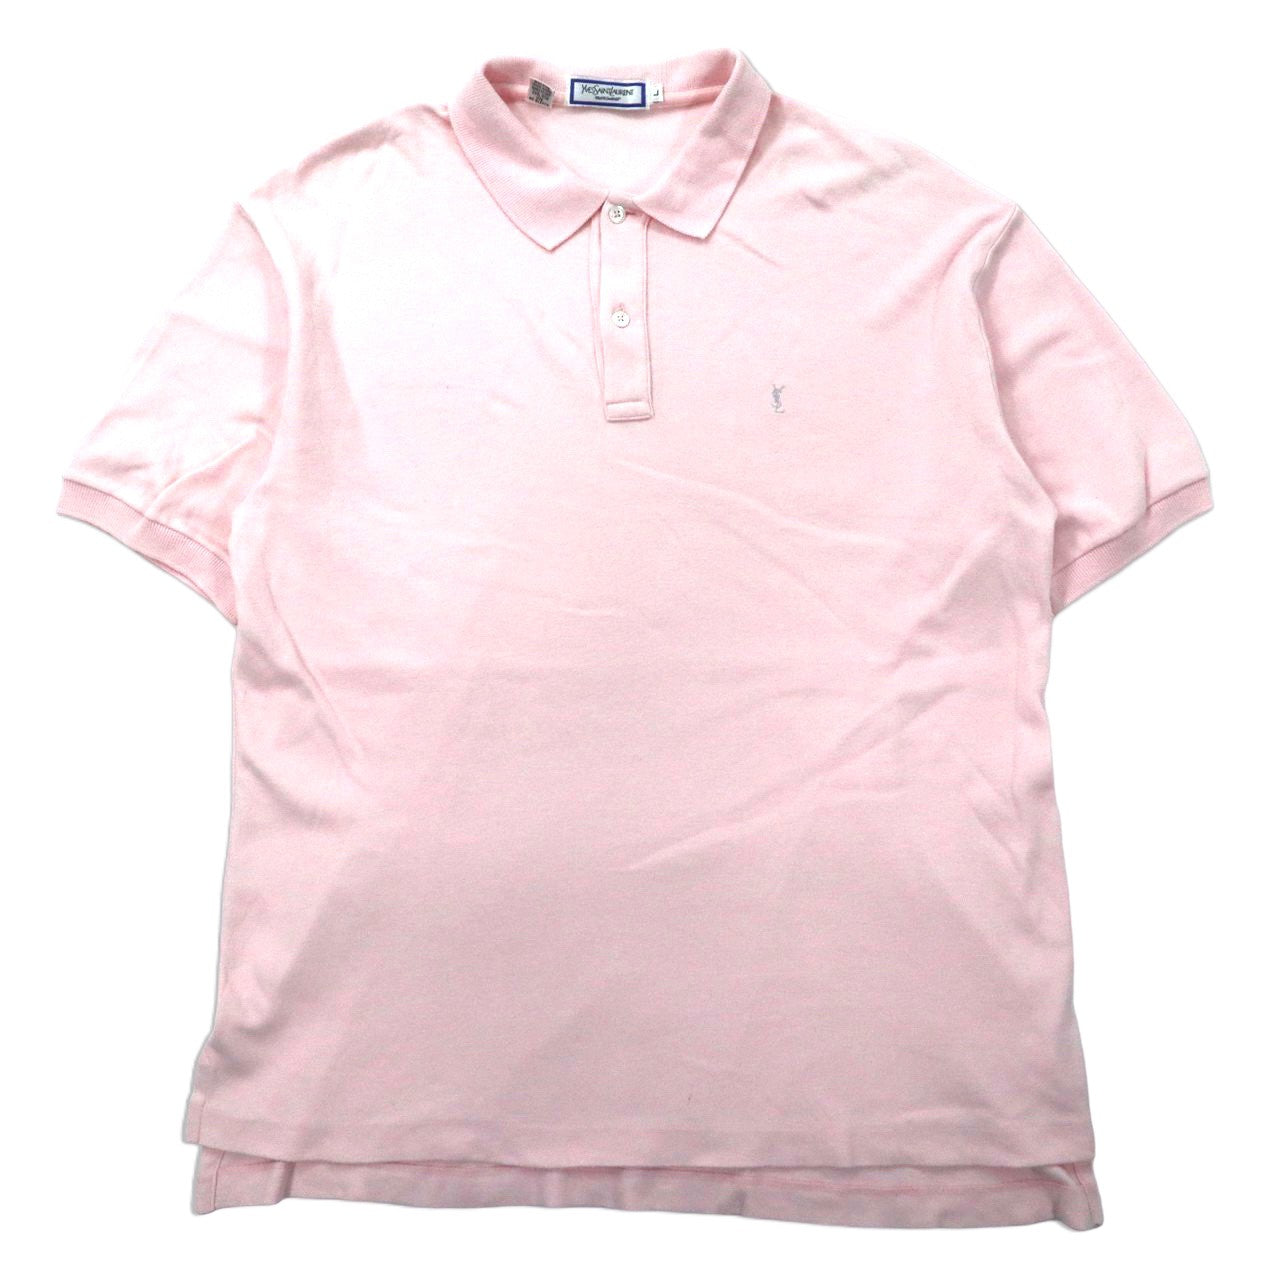 YVES SAINT LAURENT ポロシャツ L ピンク コットン YSL ワンポイントロゴ刺繍 オールド